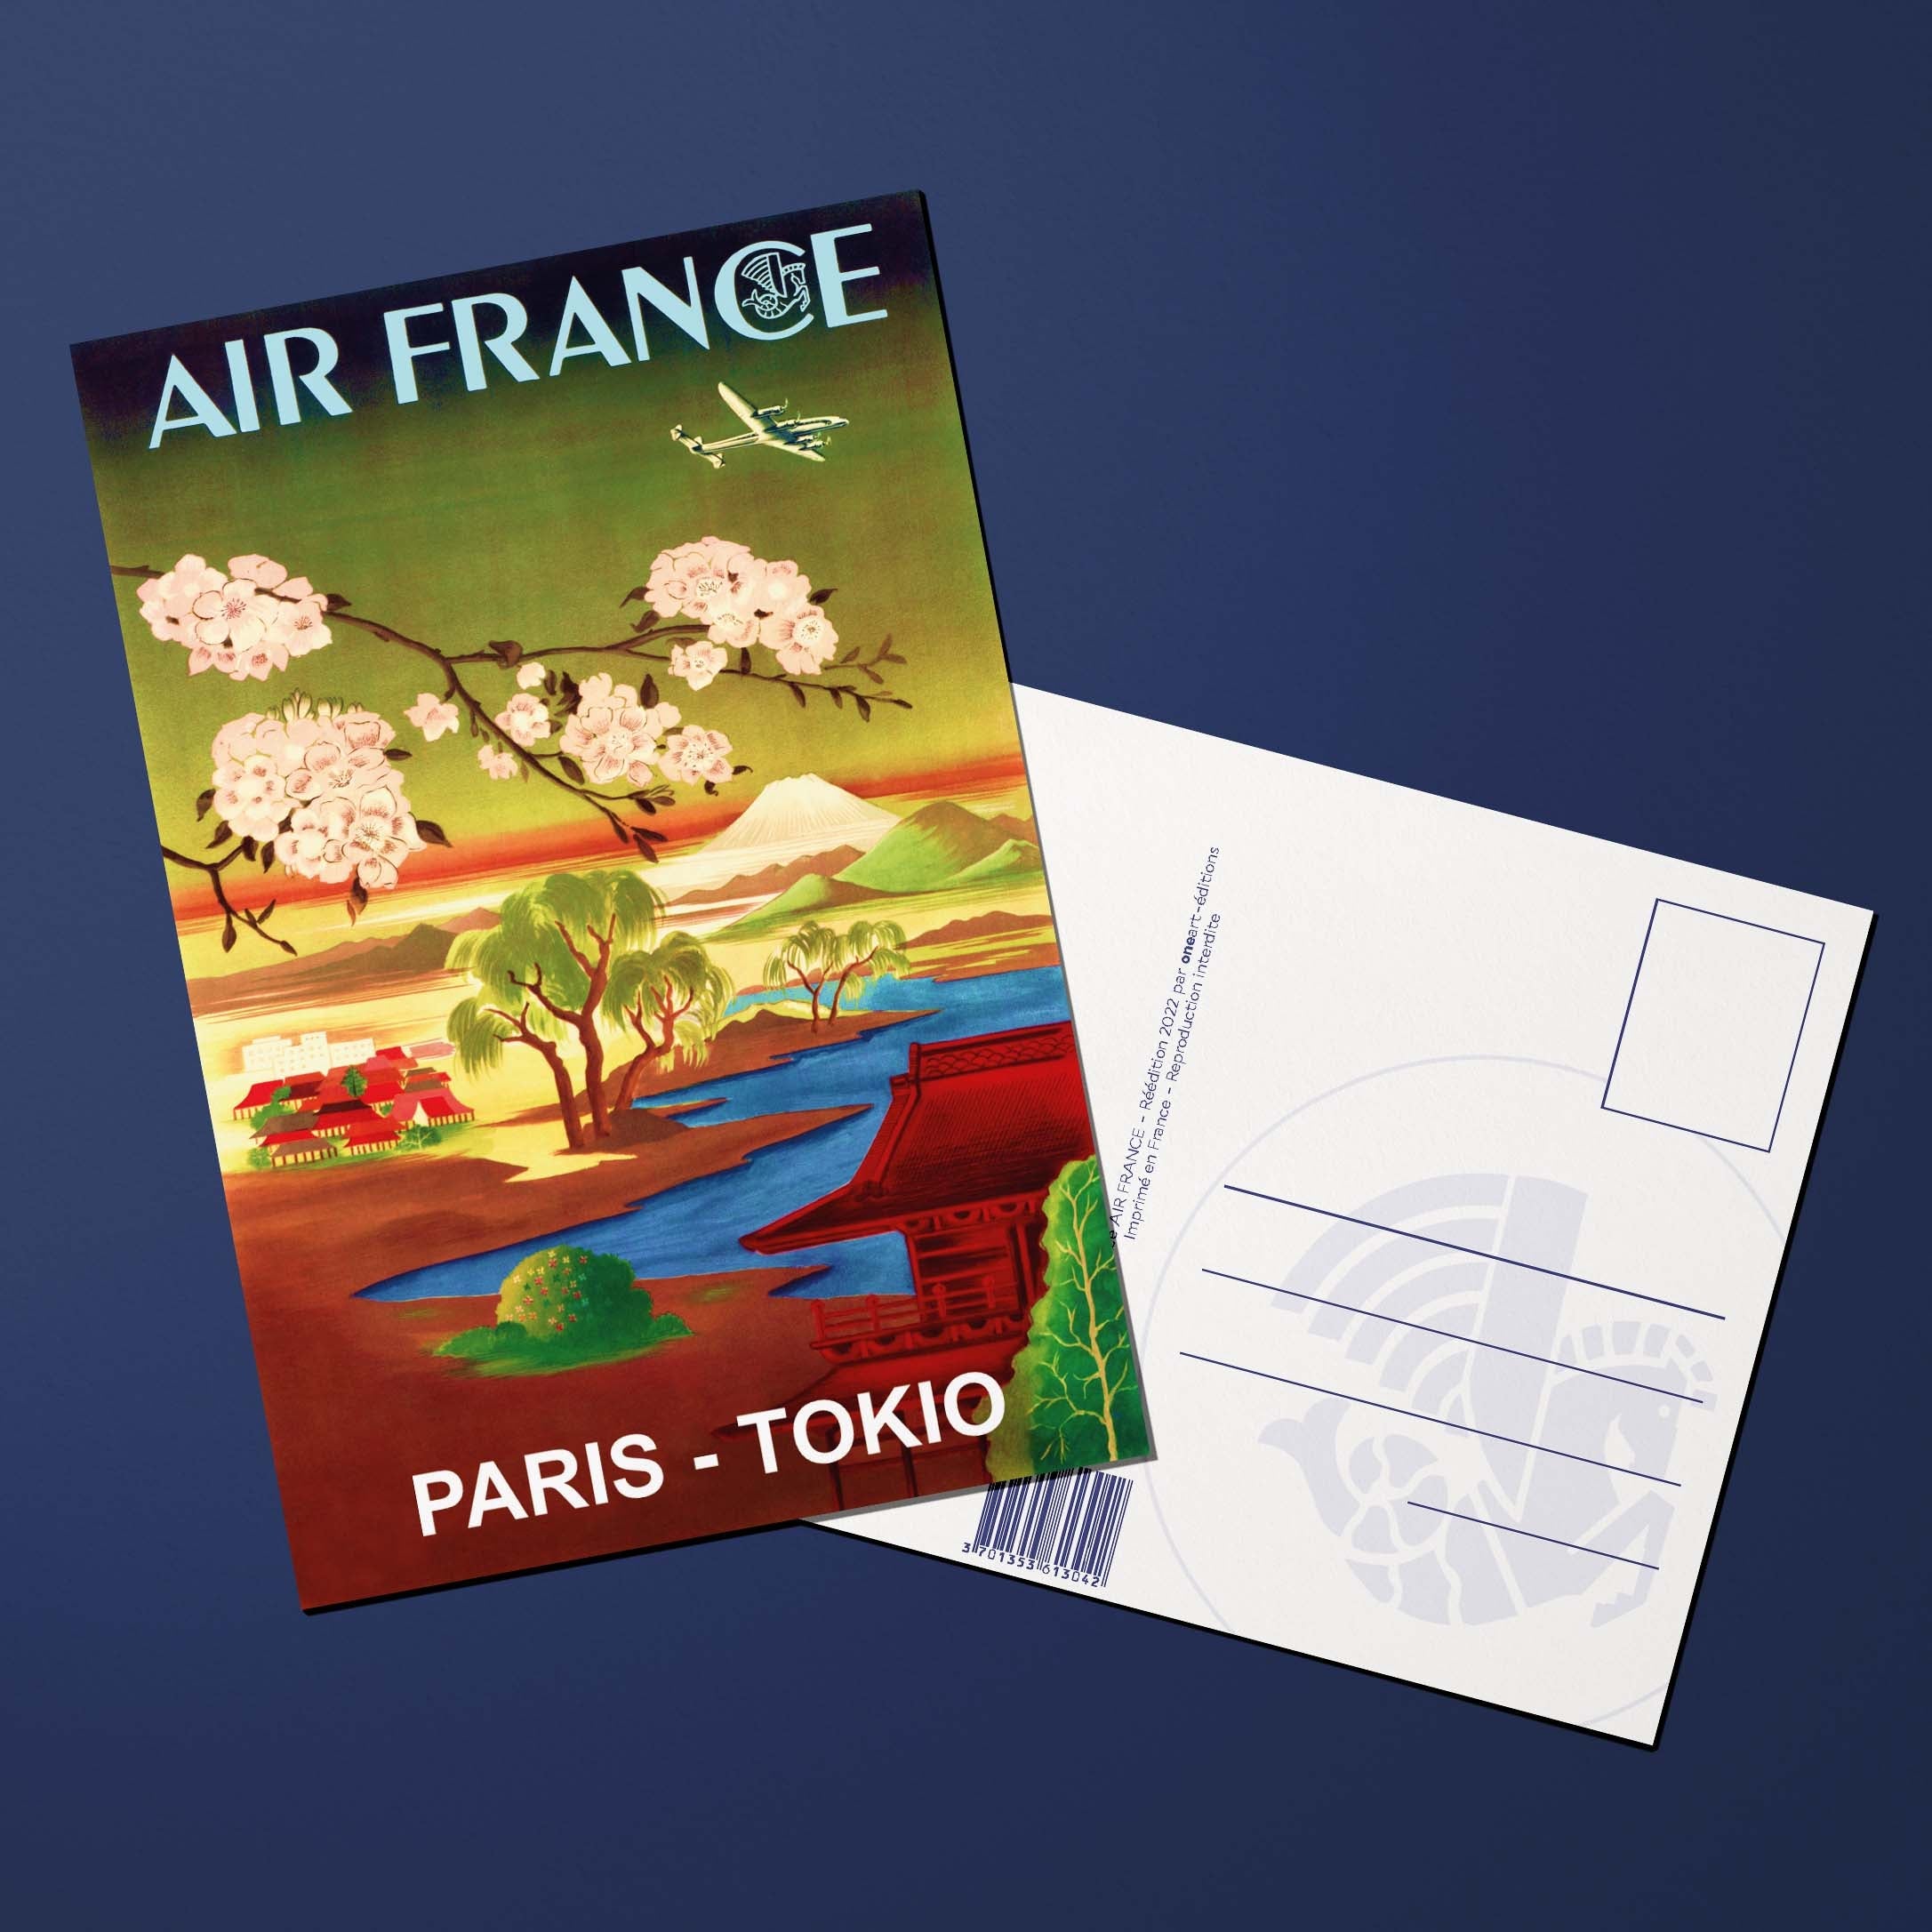 Air France Legend Paris postcard - Tokio, cherry blossoms